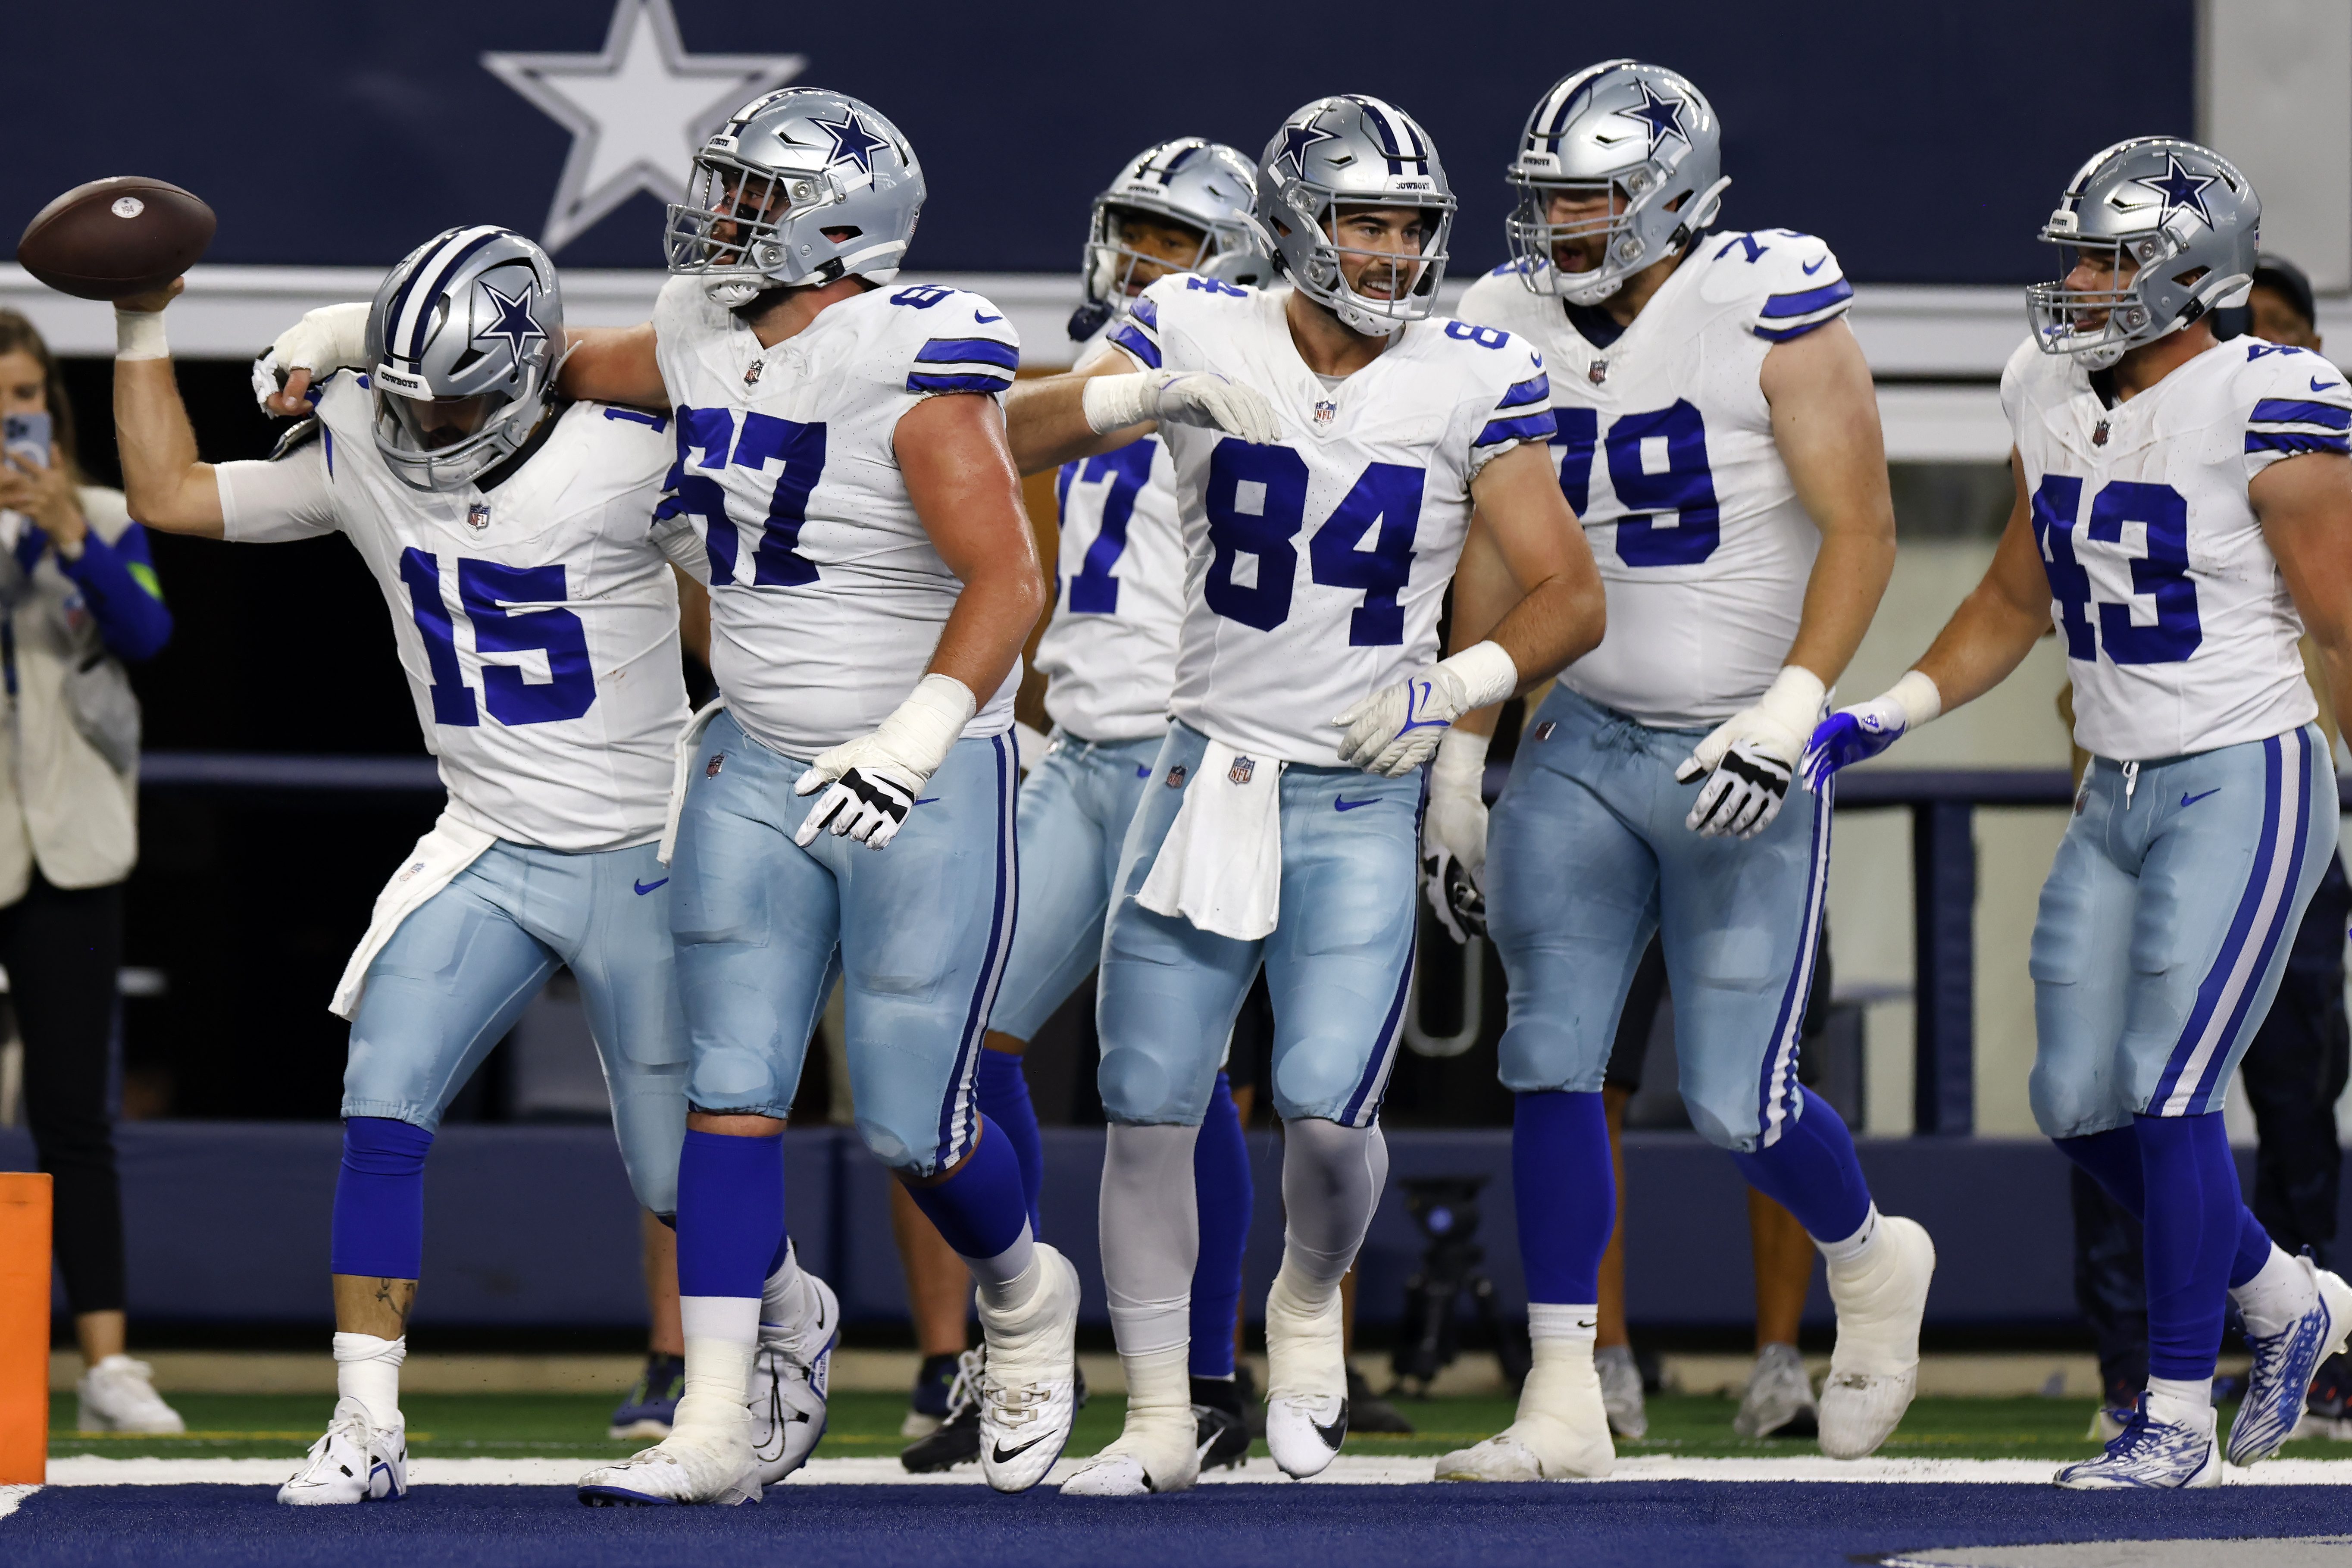 The Cowboys' New Team Theme "Carpe Omnia" Is a Bad Sign - InsideHook